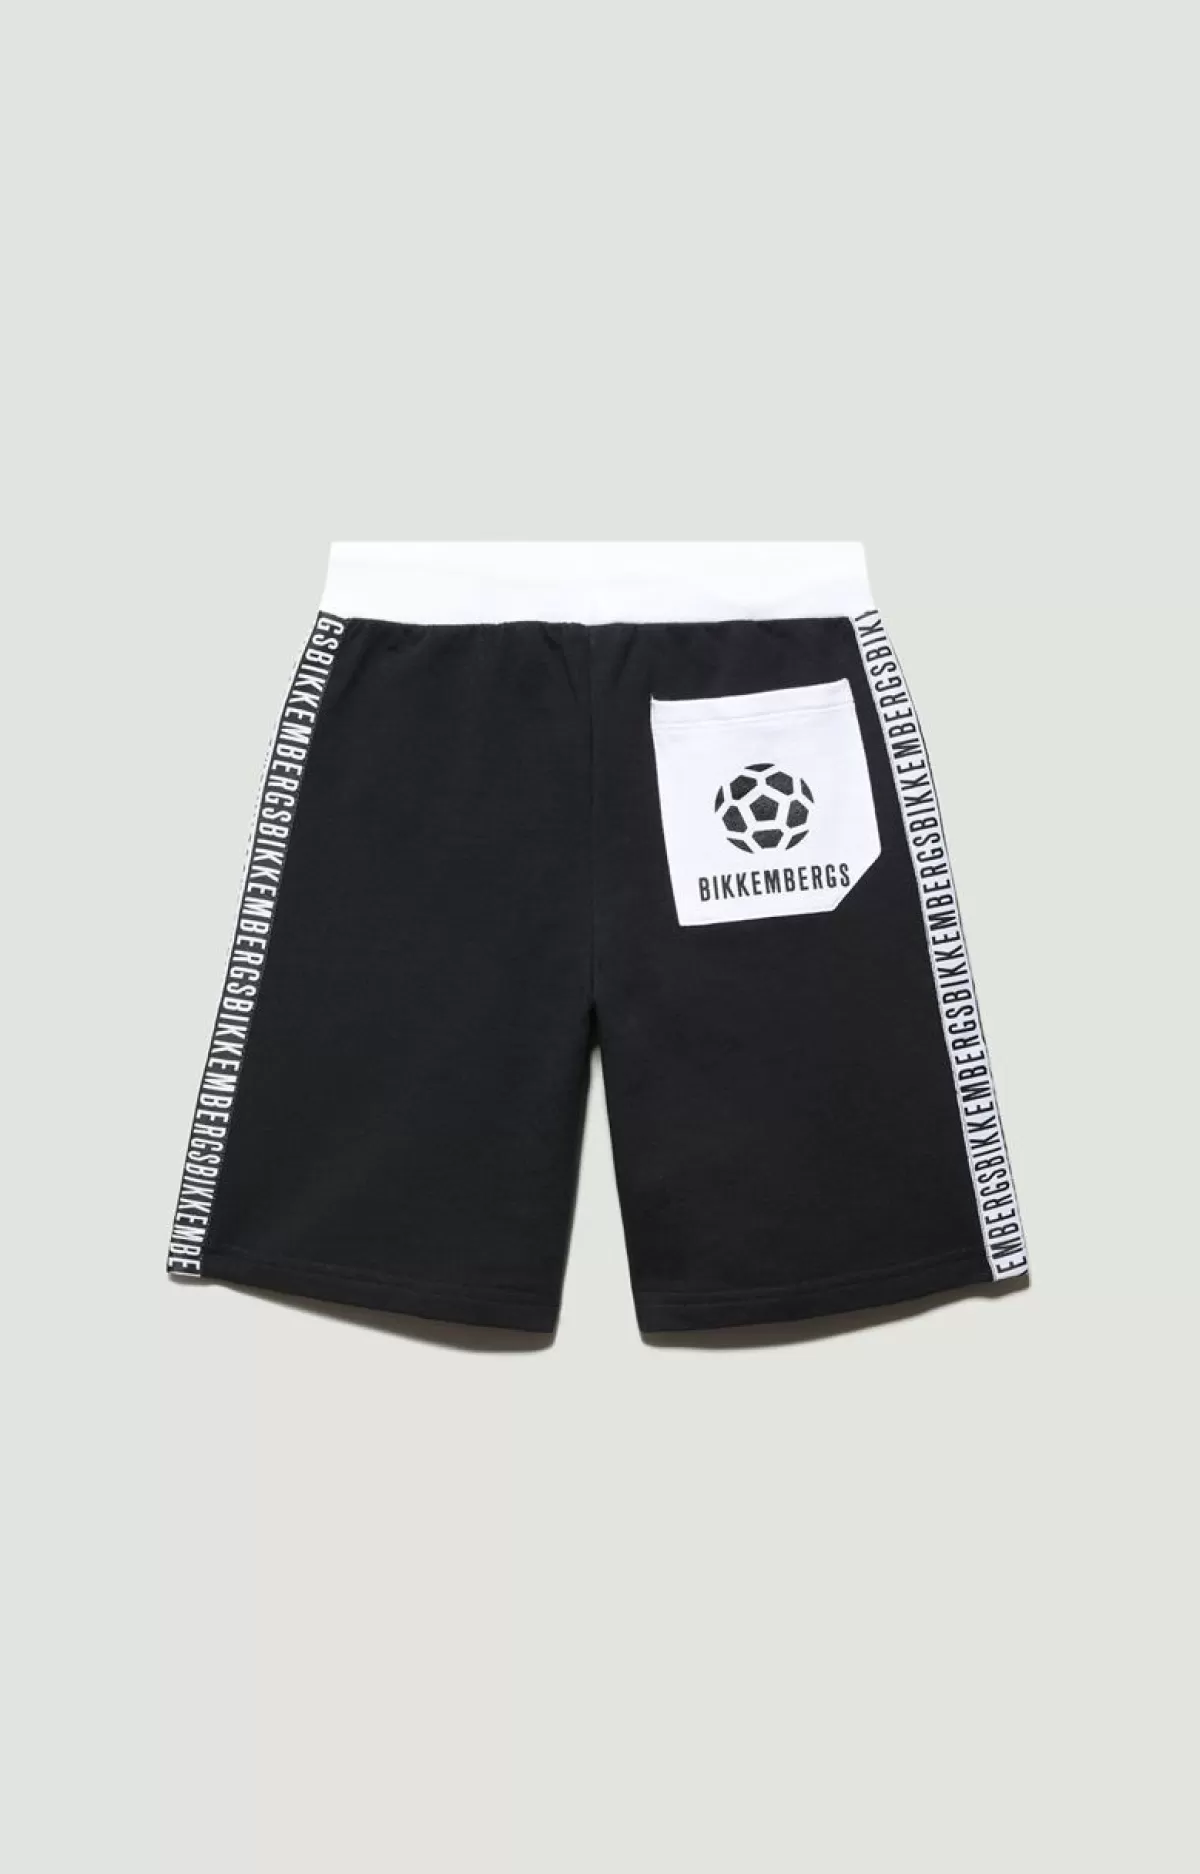 Bikkembergs Boys' Short - Soccer Print Black Flash Sale